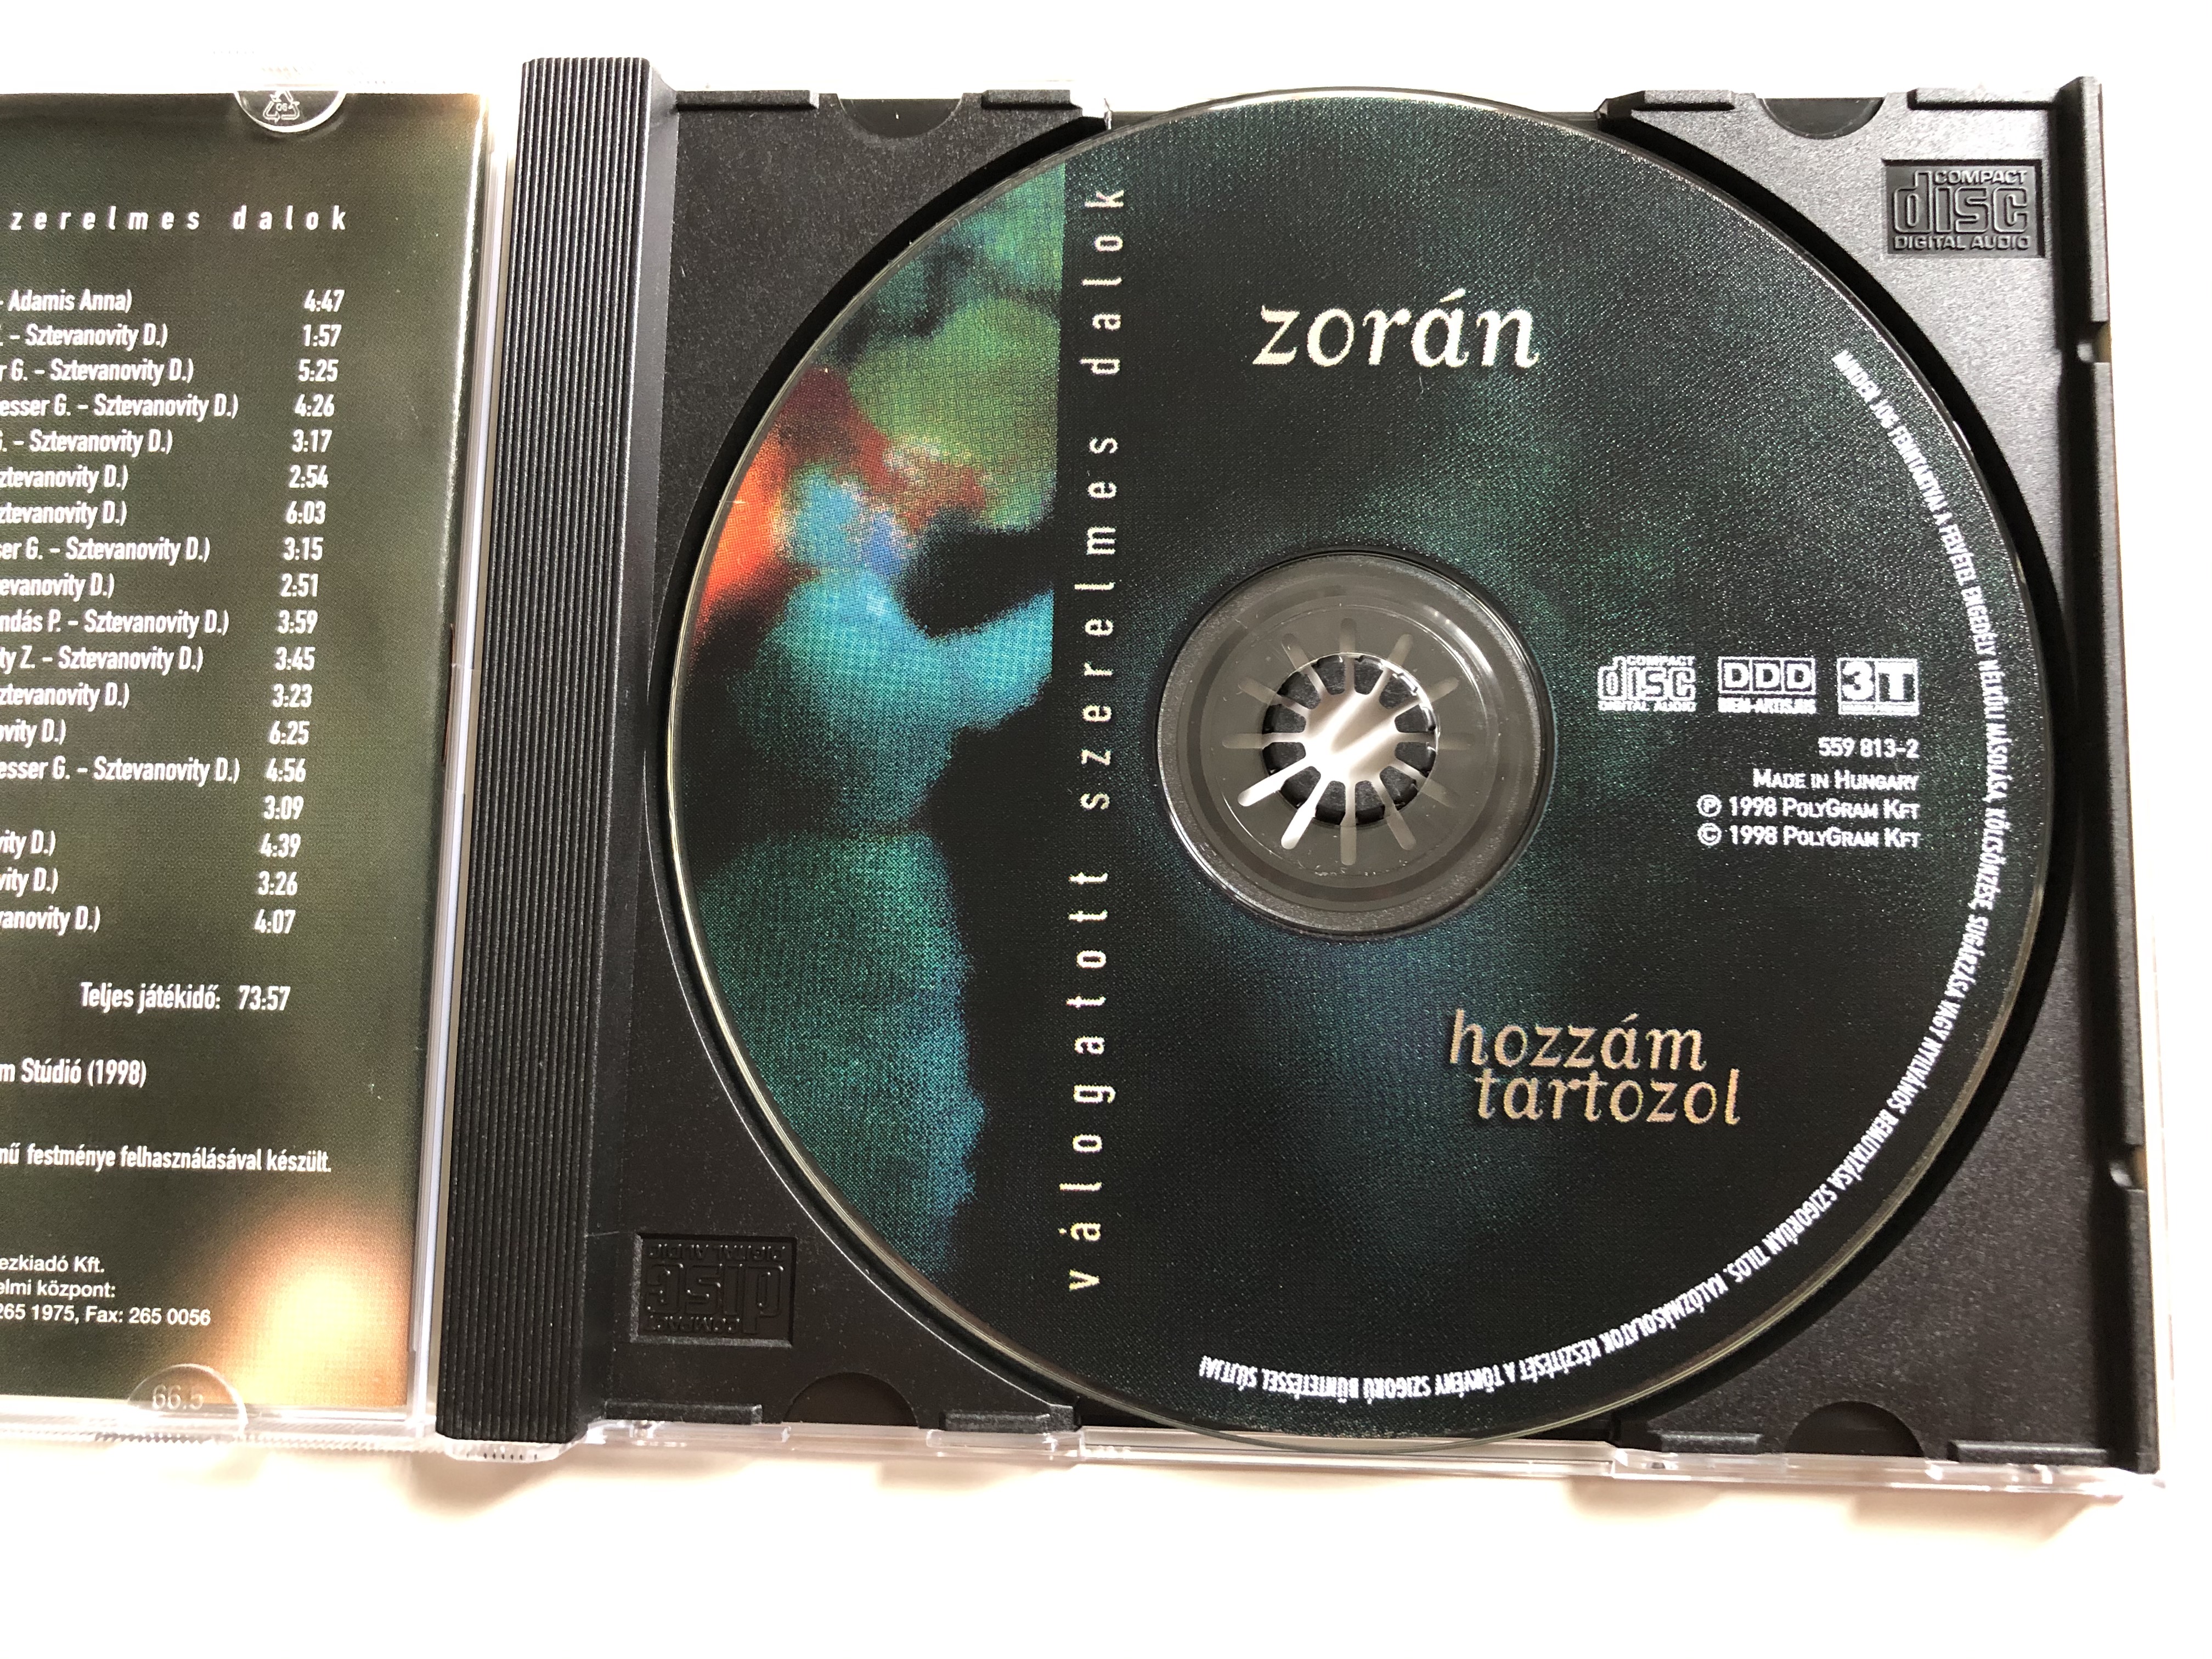 zor-n-hozz-m-tartozol-v-logatott-szerelmes-dalok-3t-audio-cd-1998-559-813-2-3-.jpg